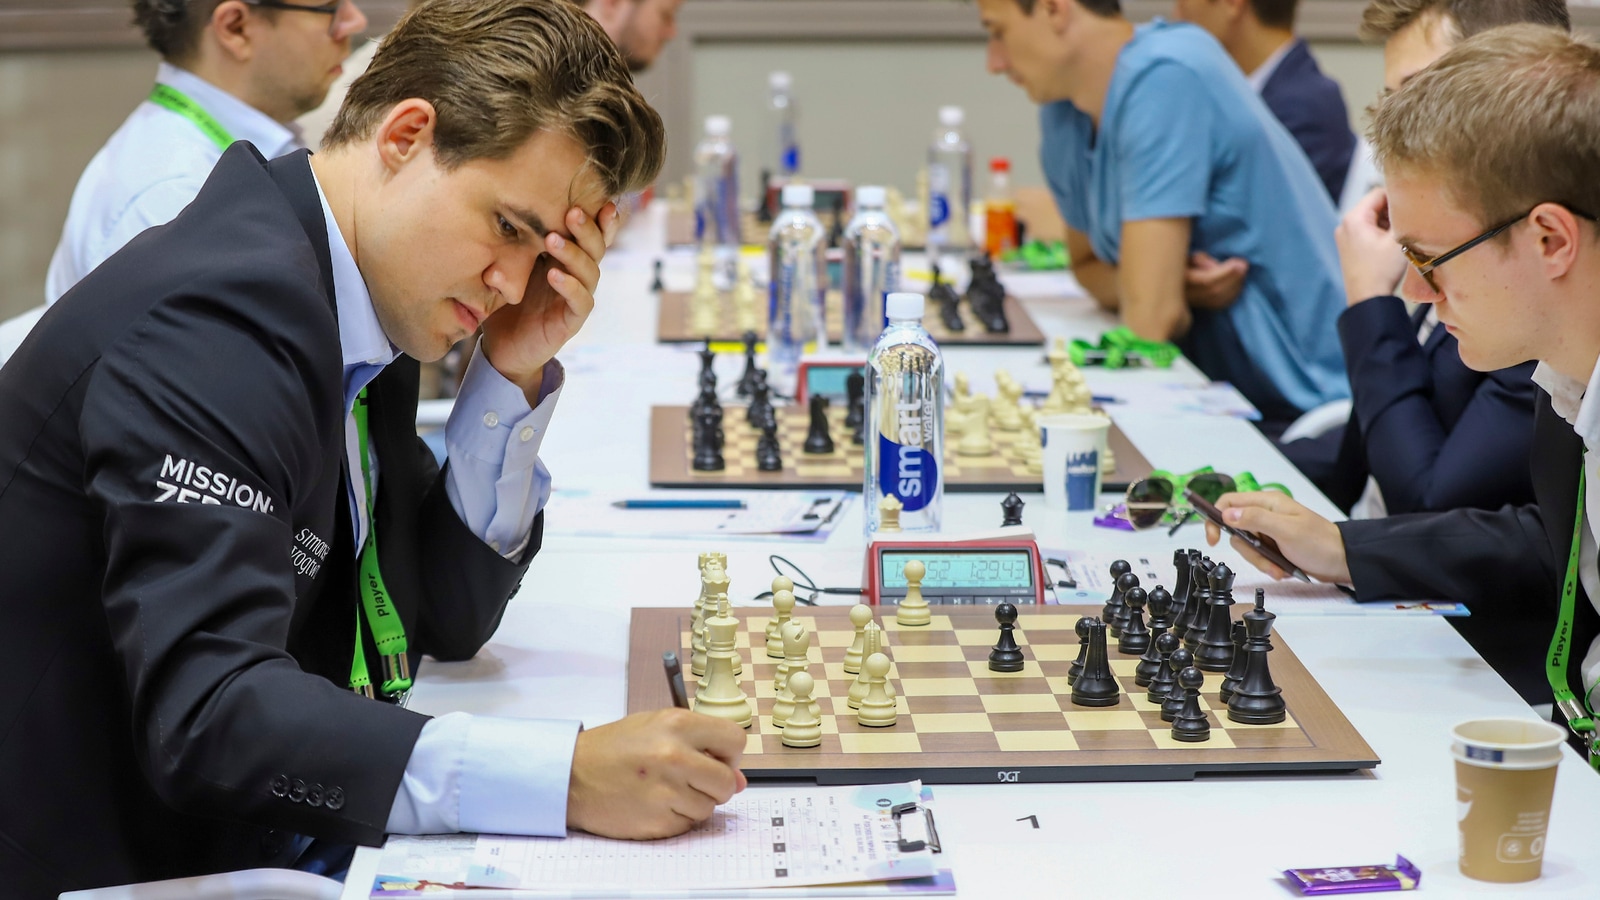 US Chess Championships (Round 2): Niemann Beats Leader 